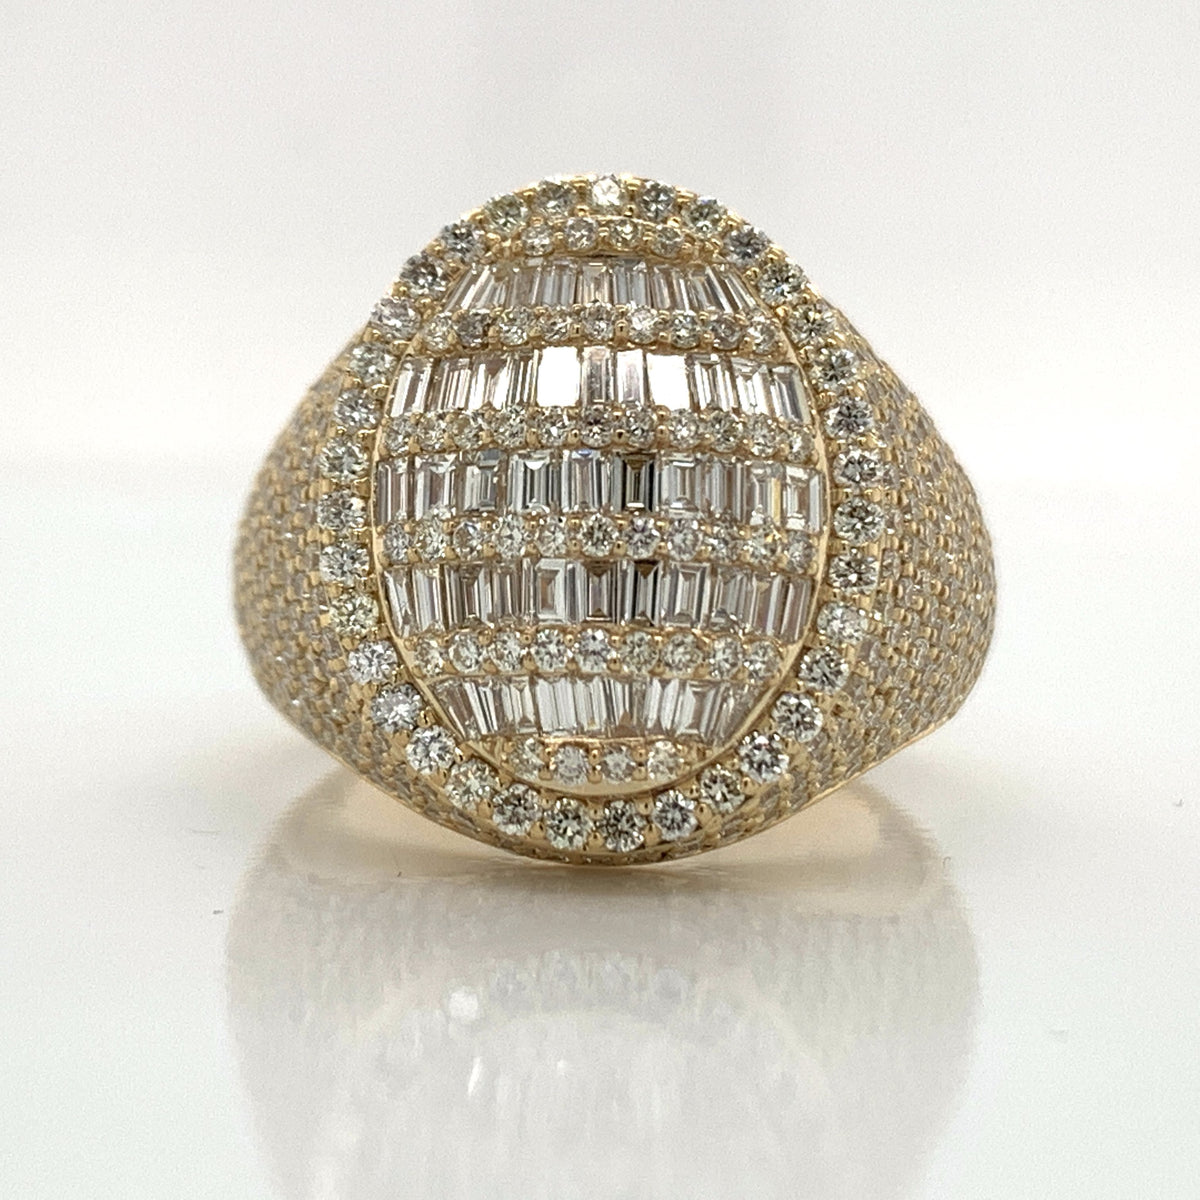 4.50 CT. Diamond Ring in Gold - White Carat - USA & Canada